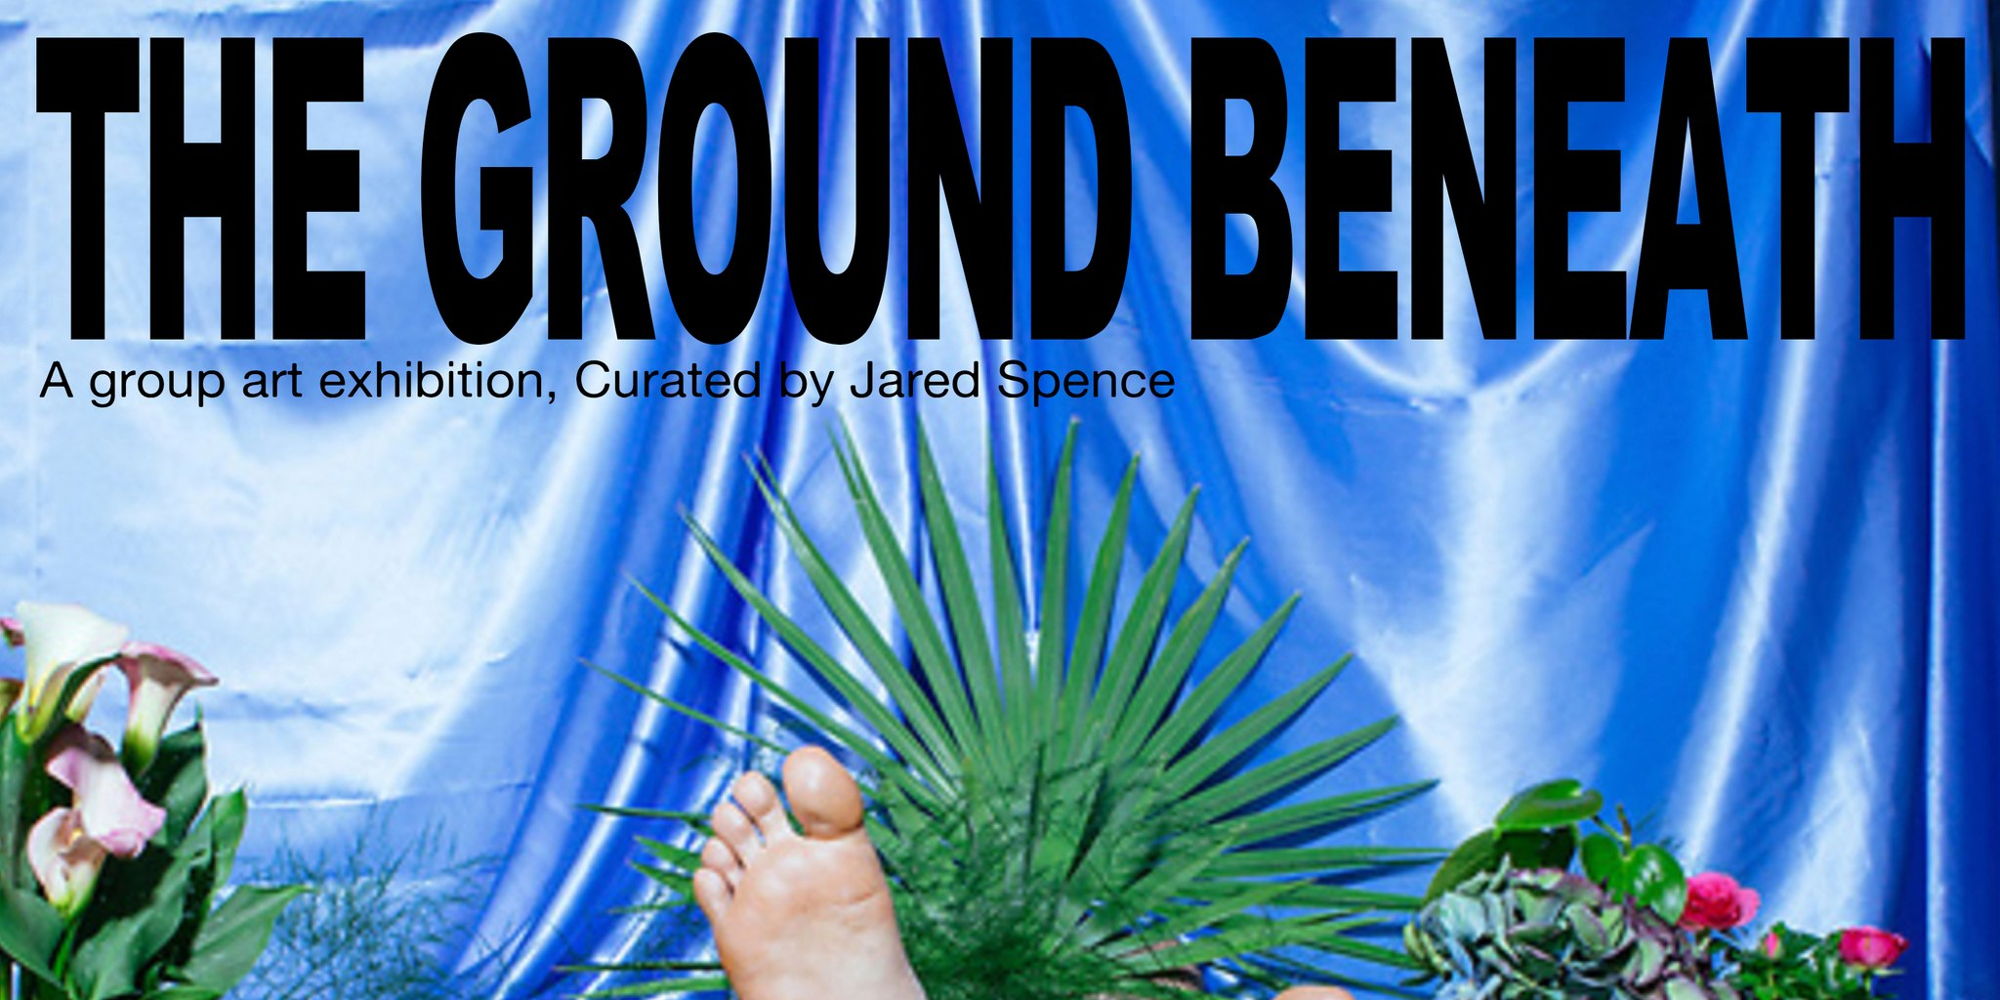 The Ground Beneath promotional image